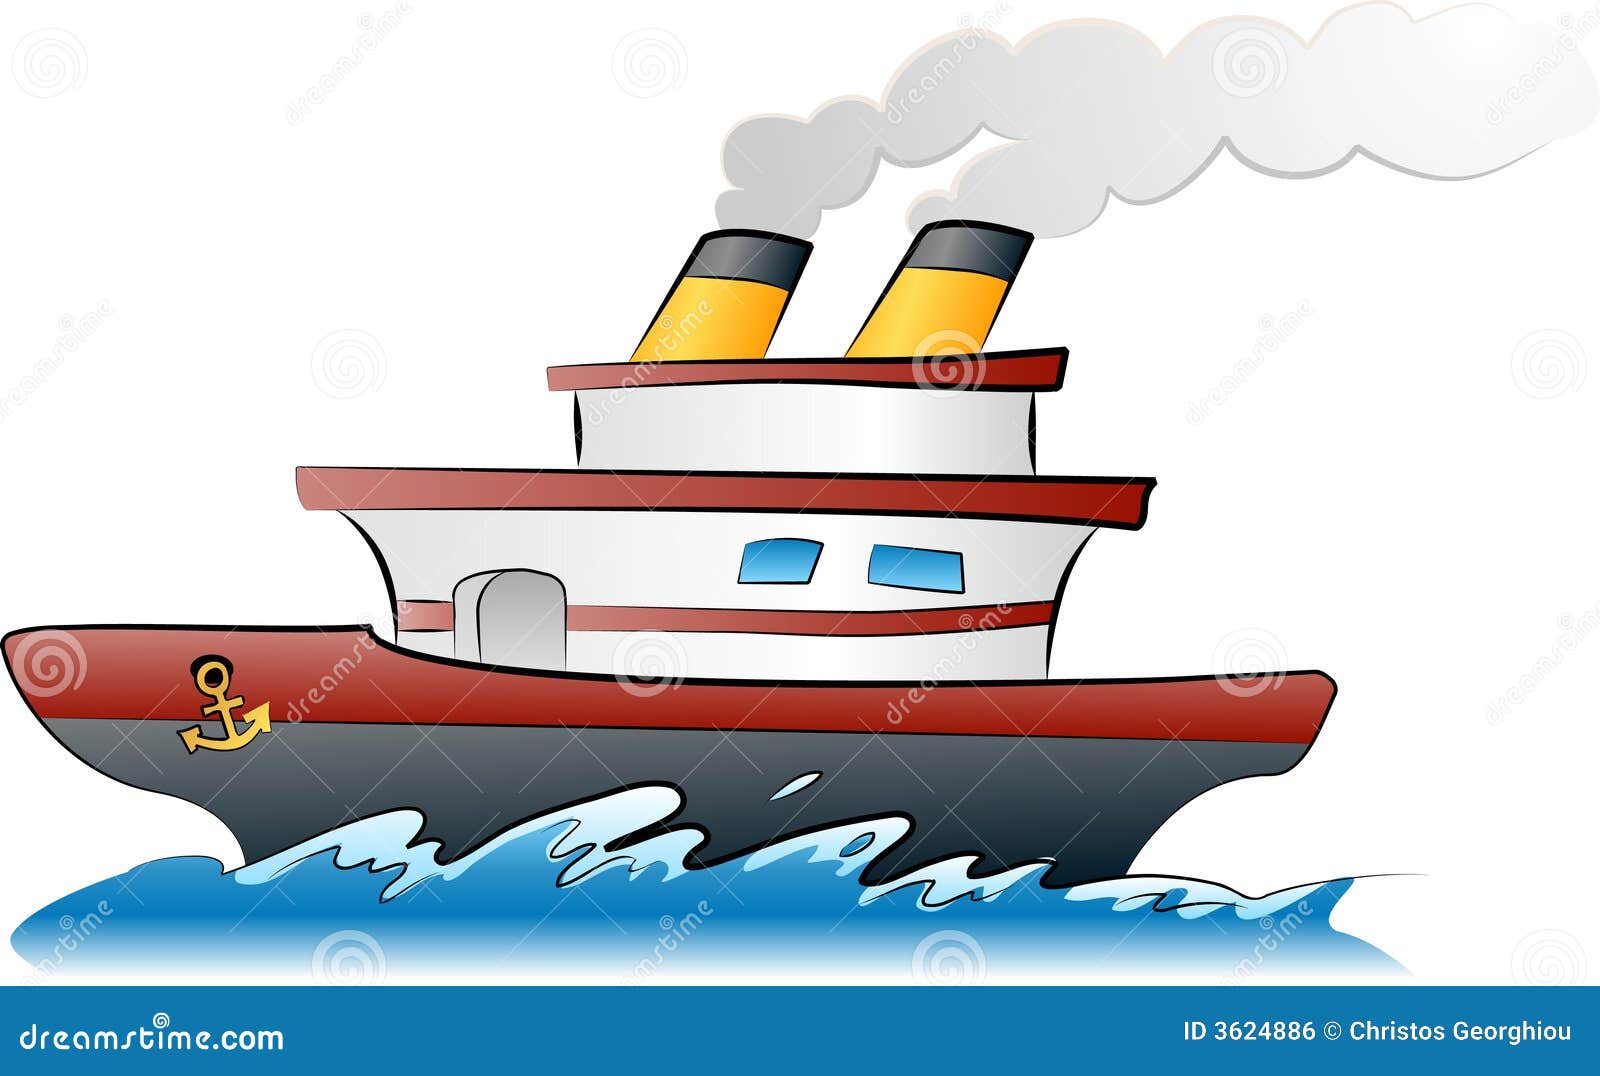 clipart ship animation - photo #49